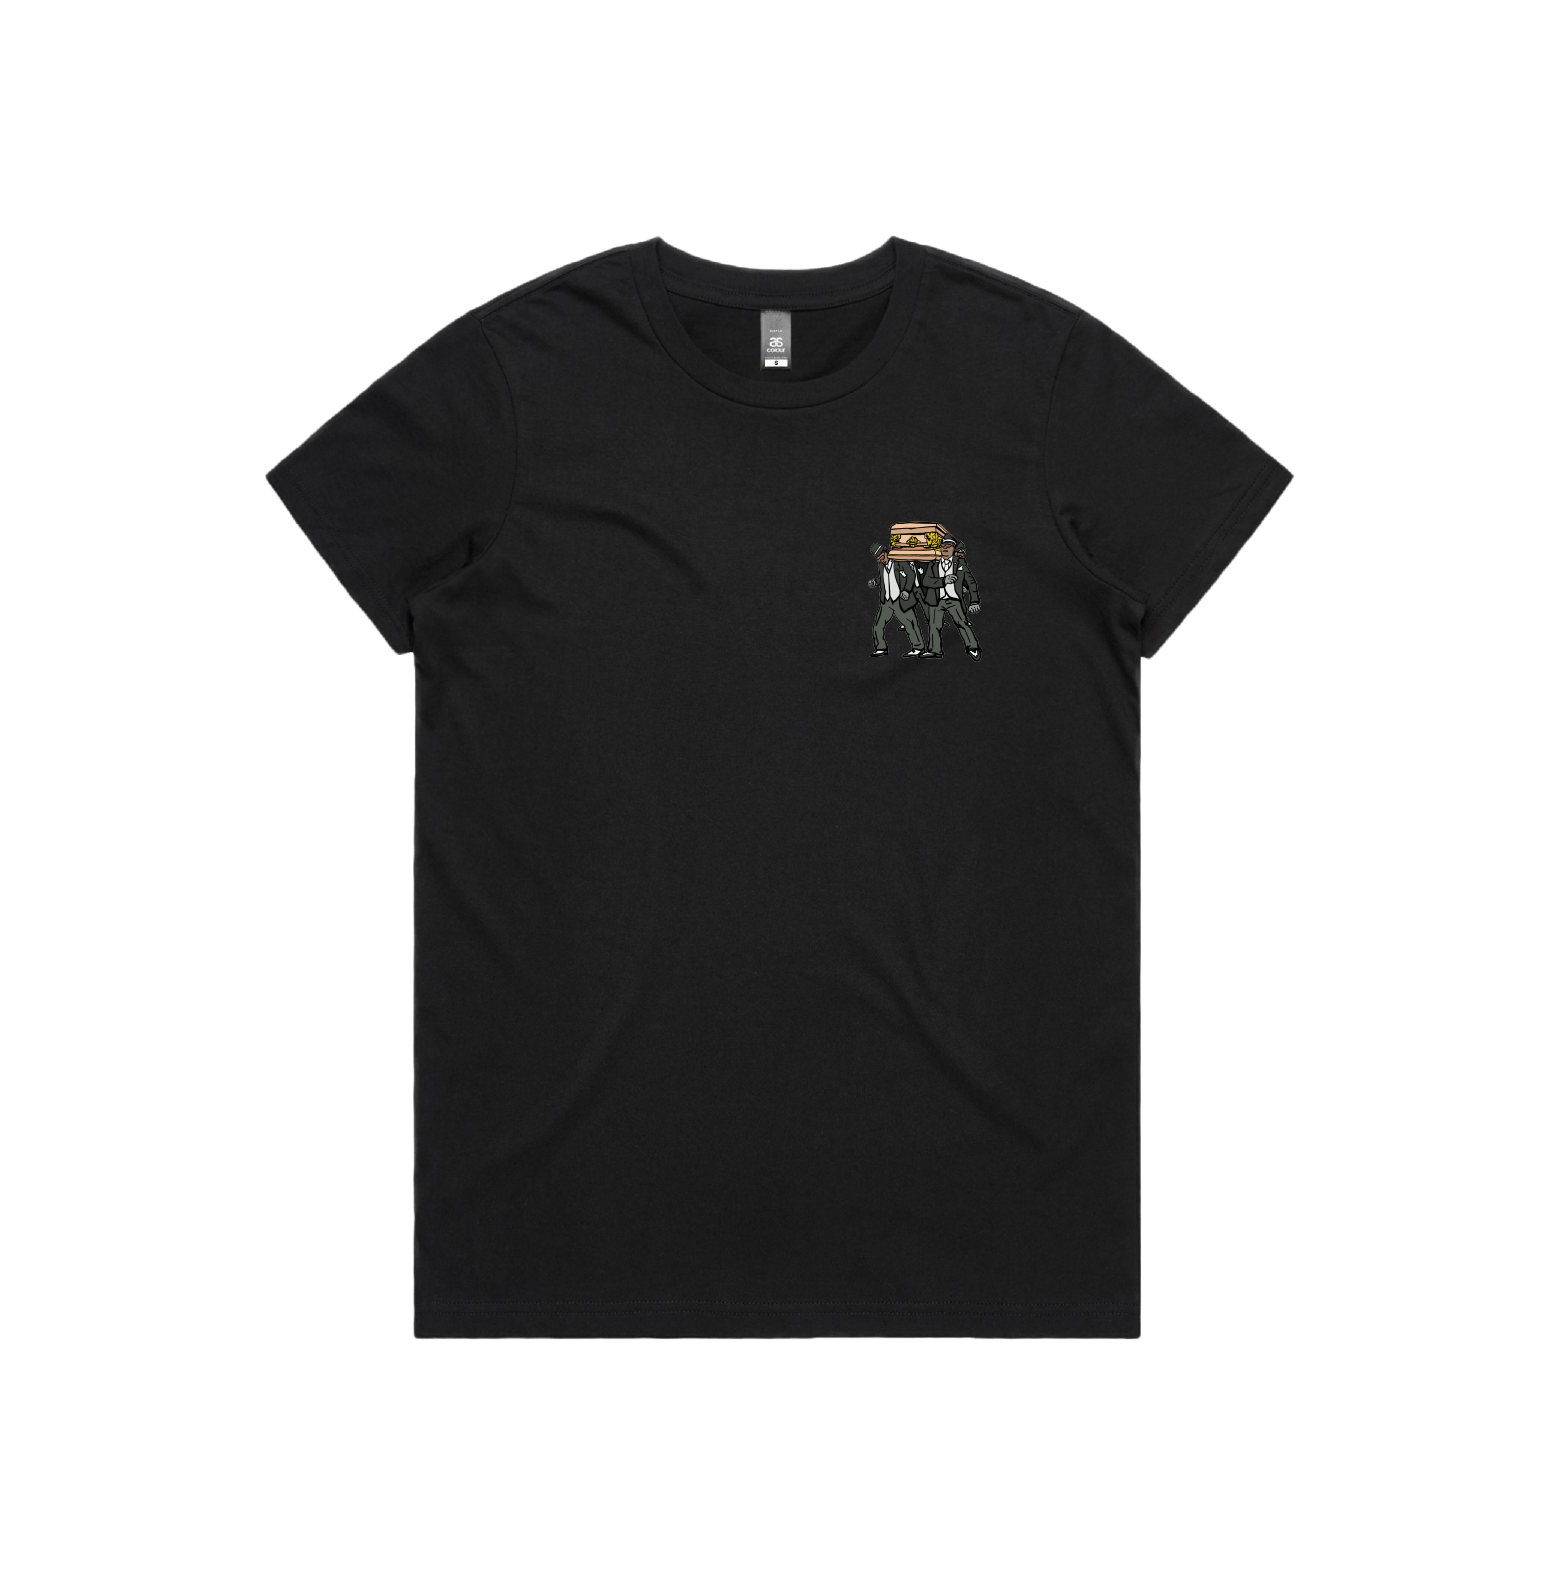 XS / Black / Small Front Design Coffin Dance ⚰️ - Women's T Shirt